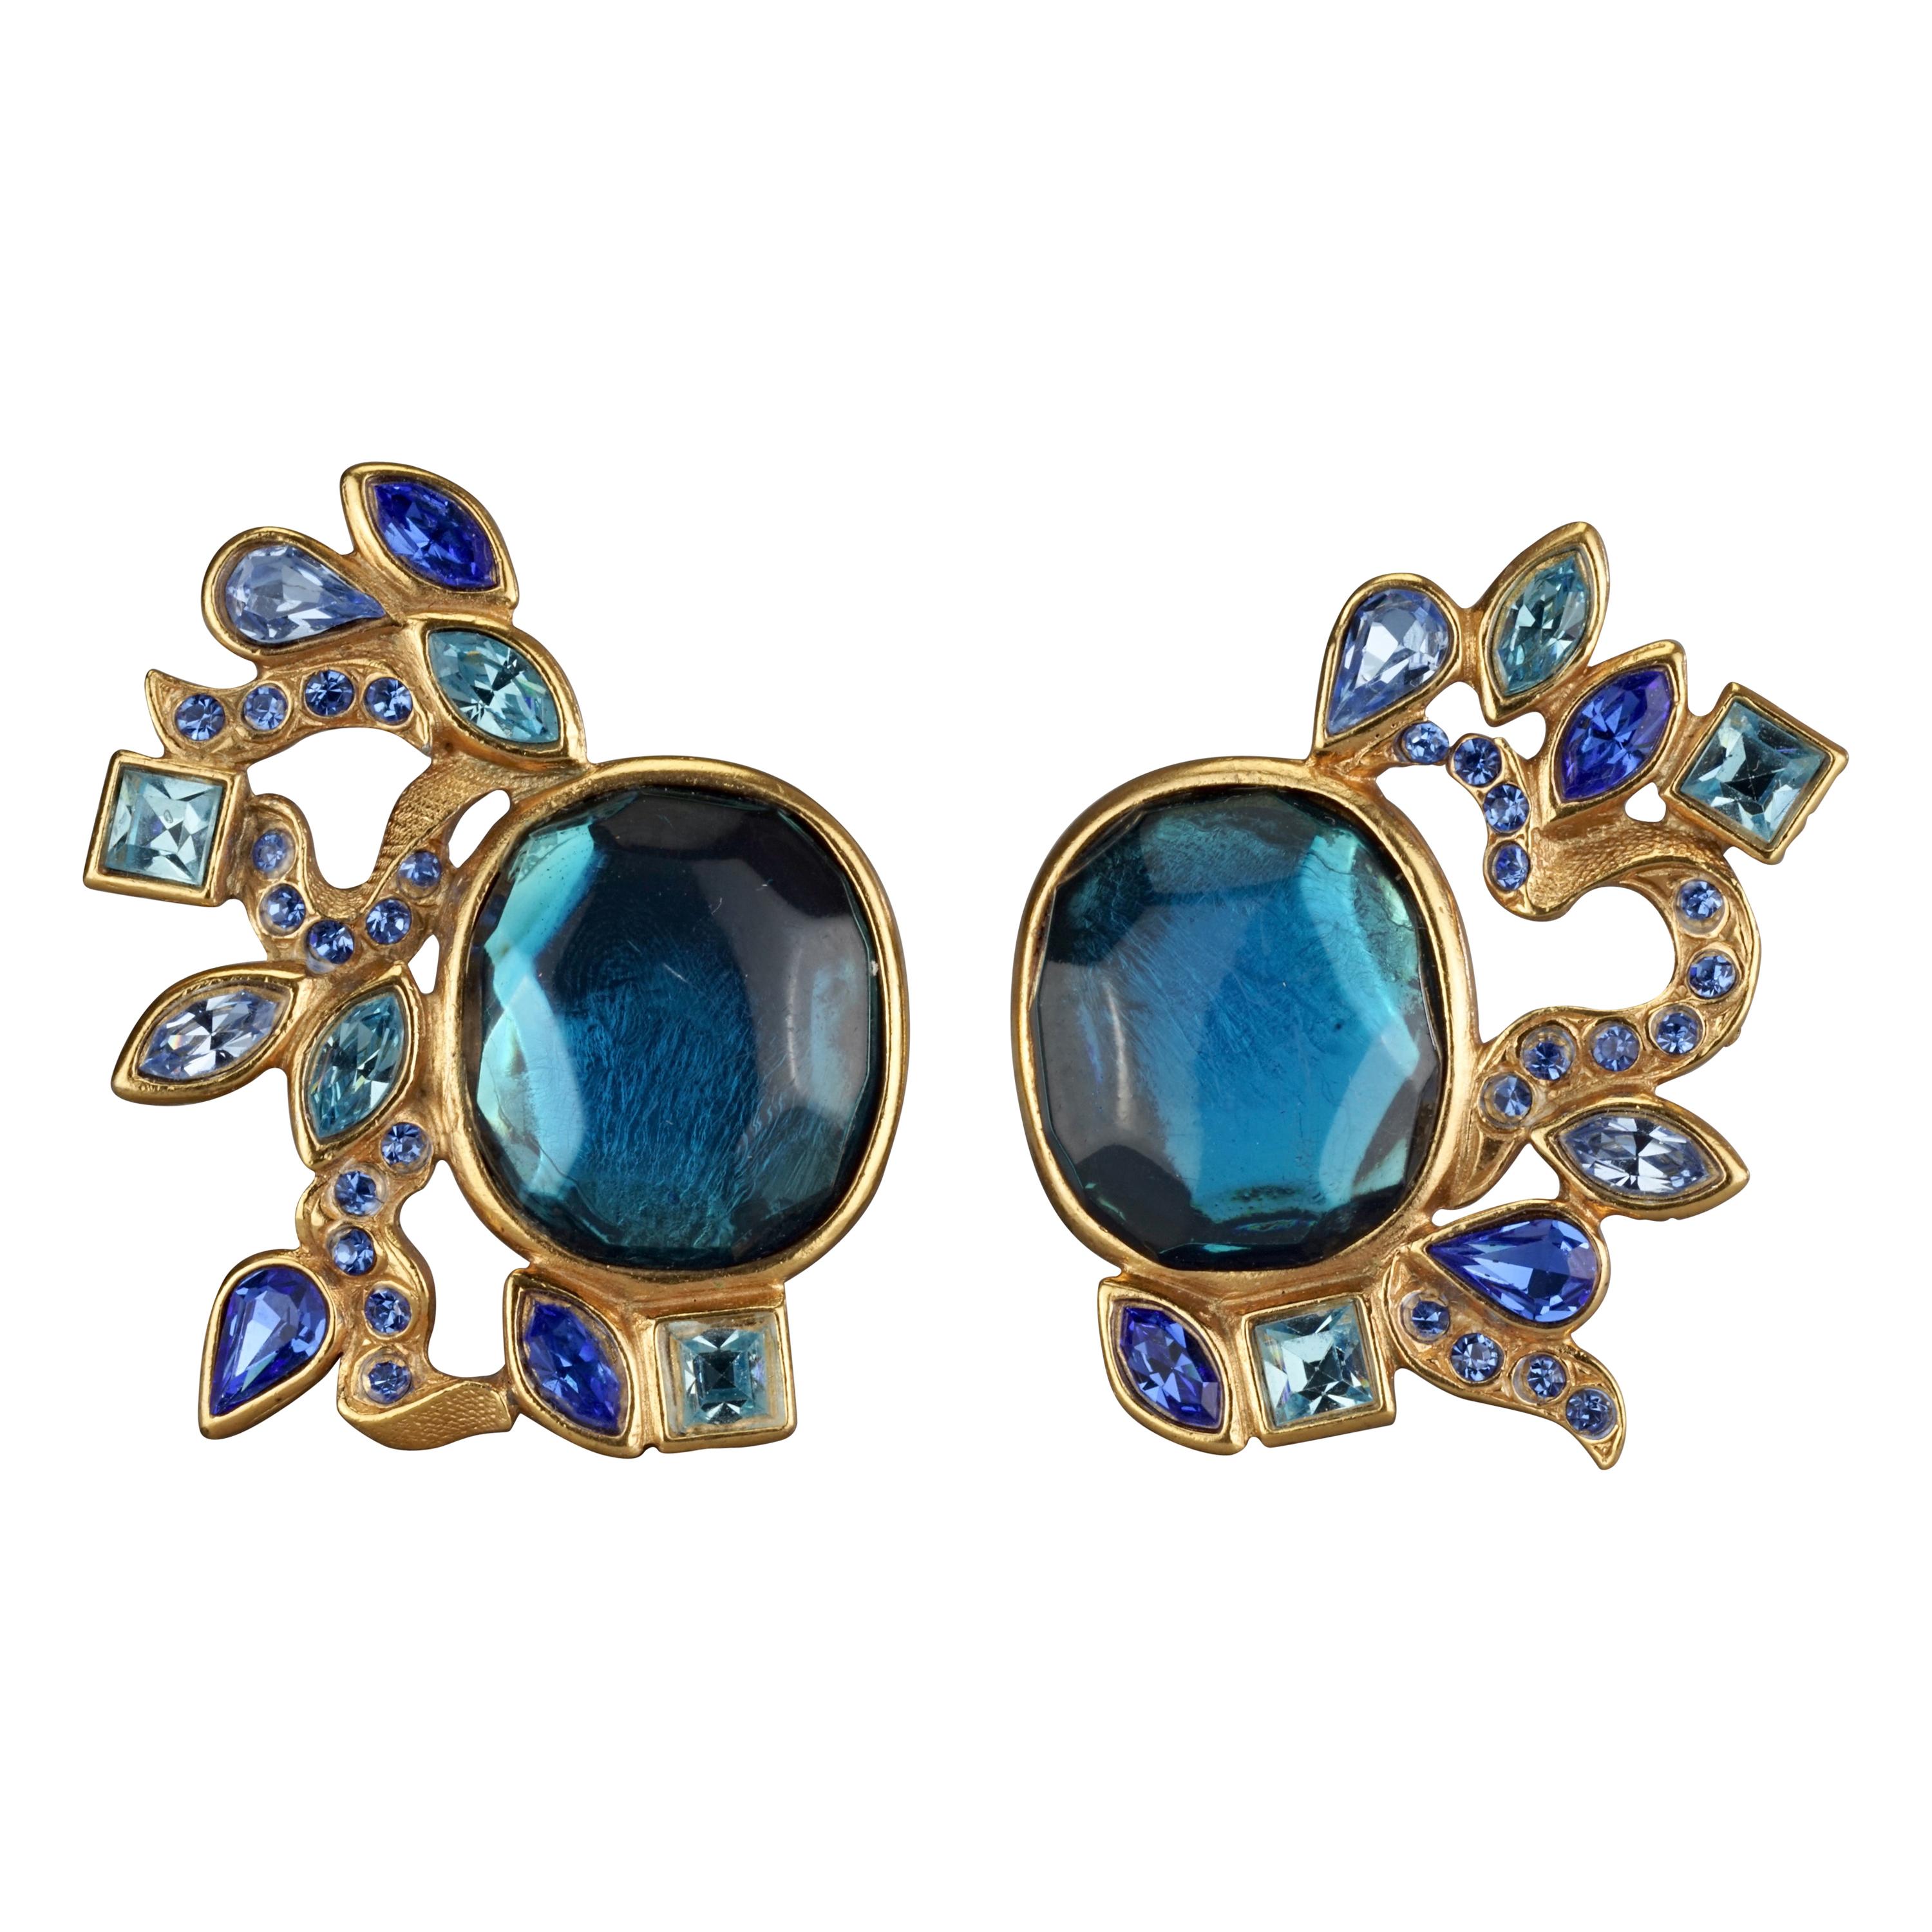 Vintage YVES SAINT LAURENT Ysl by Goossens Ornate Faceted Blue Stone Earrings